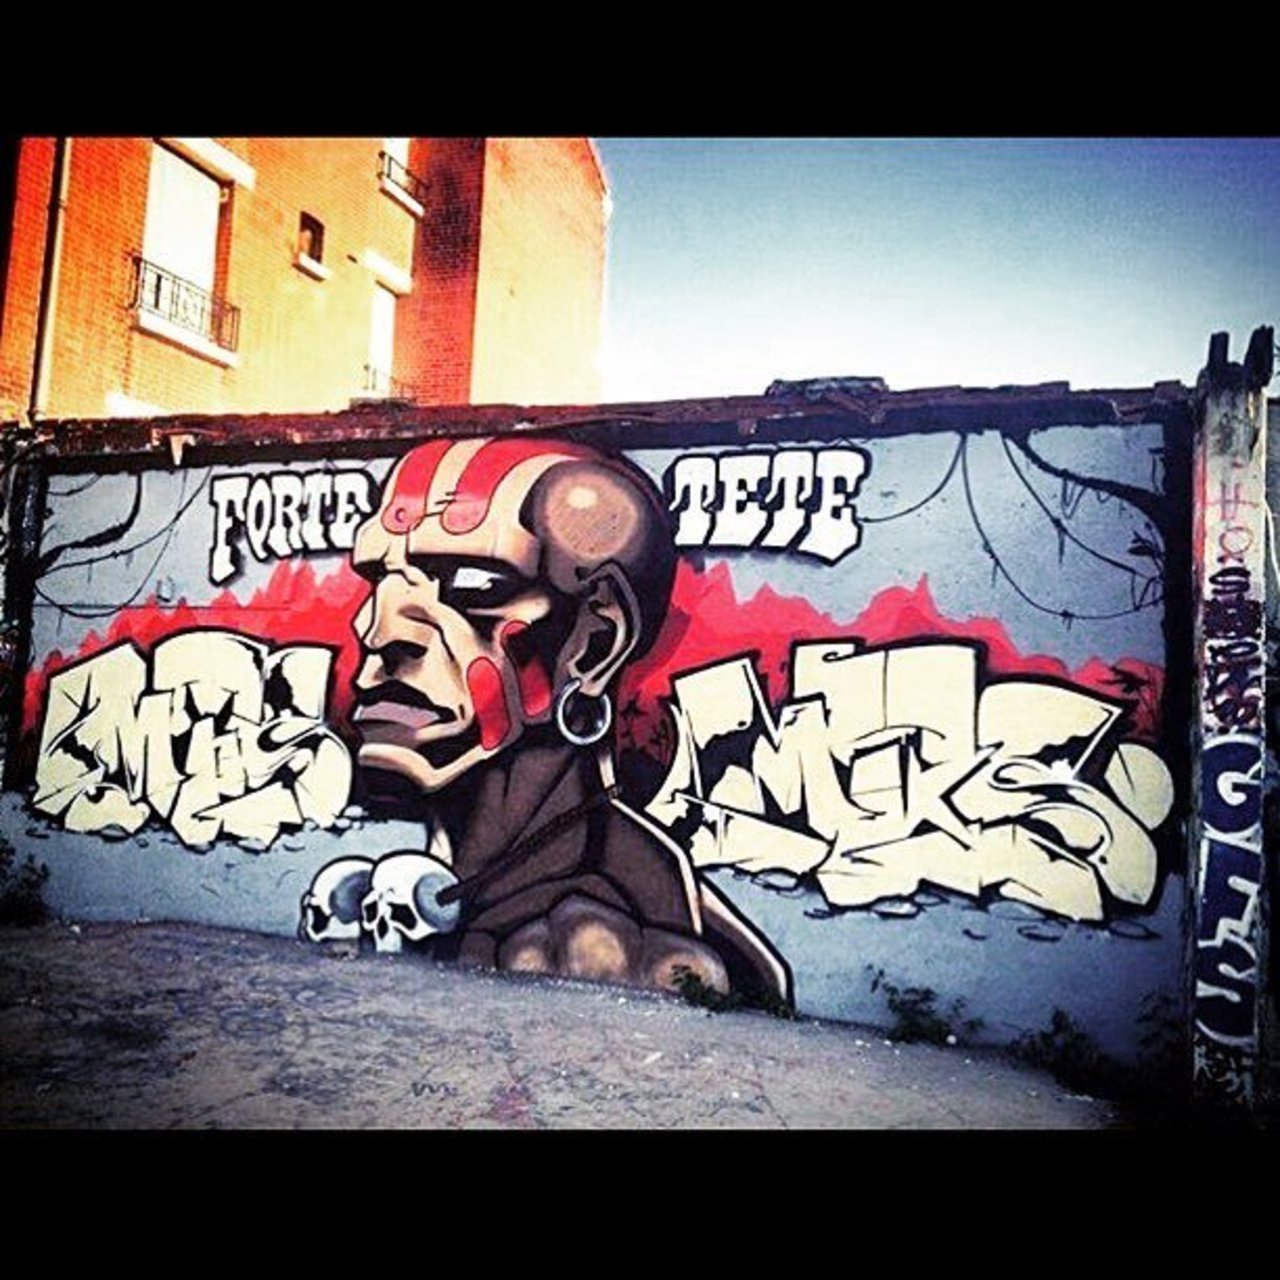 Some Street Fighter Street Art 🤔- anyone know the artist?----#streetart #mural #inkto… http://ift.tt/2eqs2Ay https://t.co/0QXME4NBGx